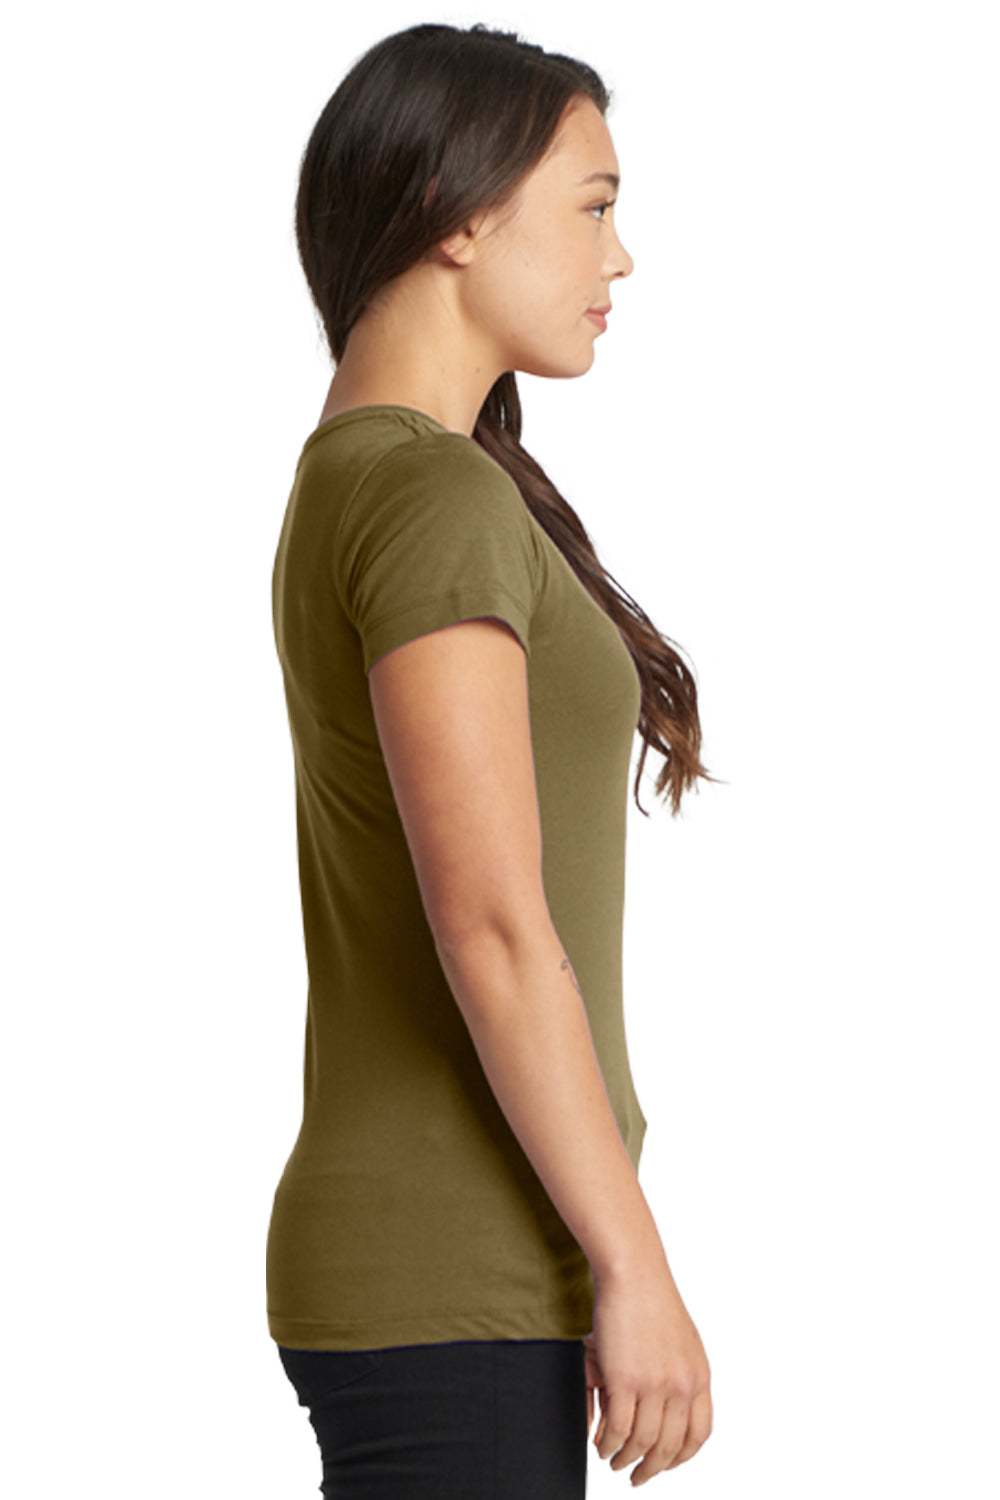 Next Level N1510 Womens Ideal Jersey Short Sleeve Crewneck T-Shirt Military Green Side